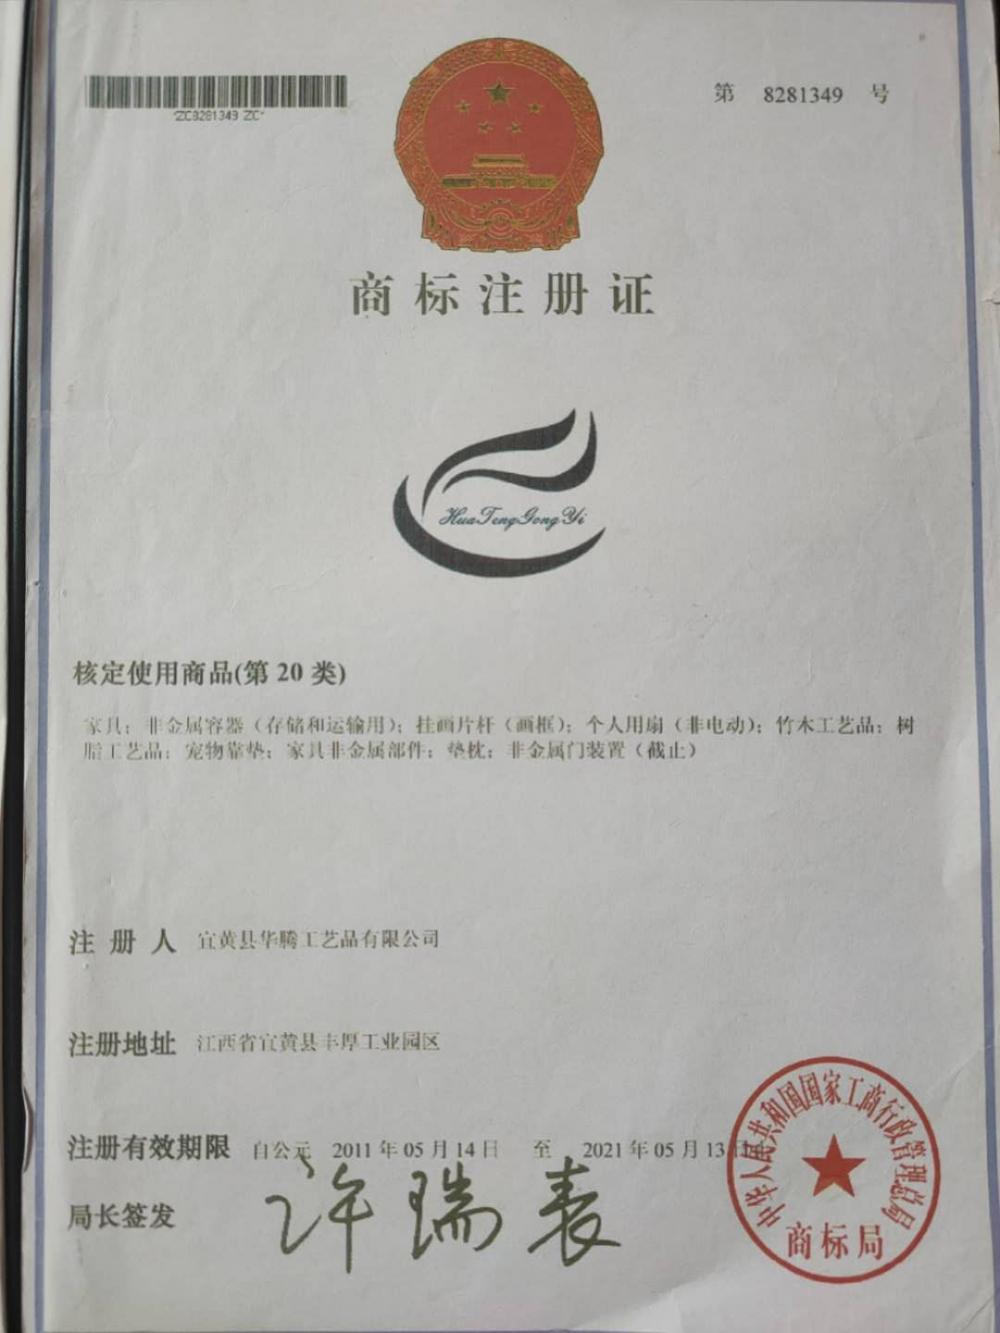 Certificate of registration of trade mark